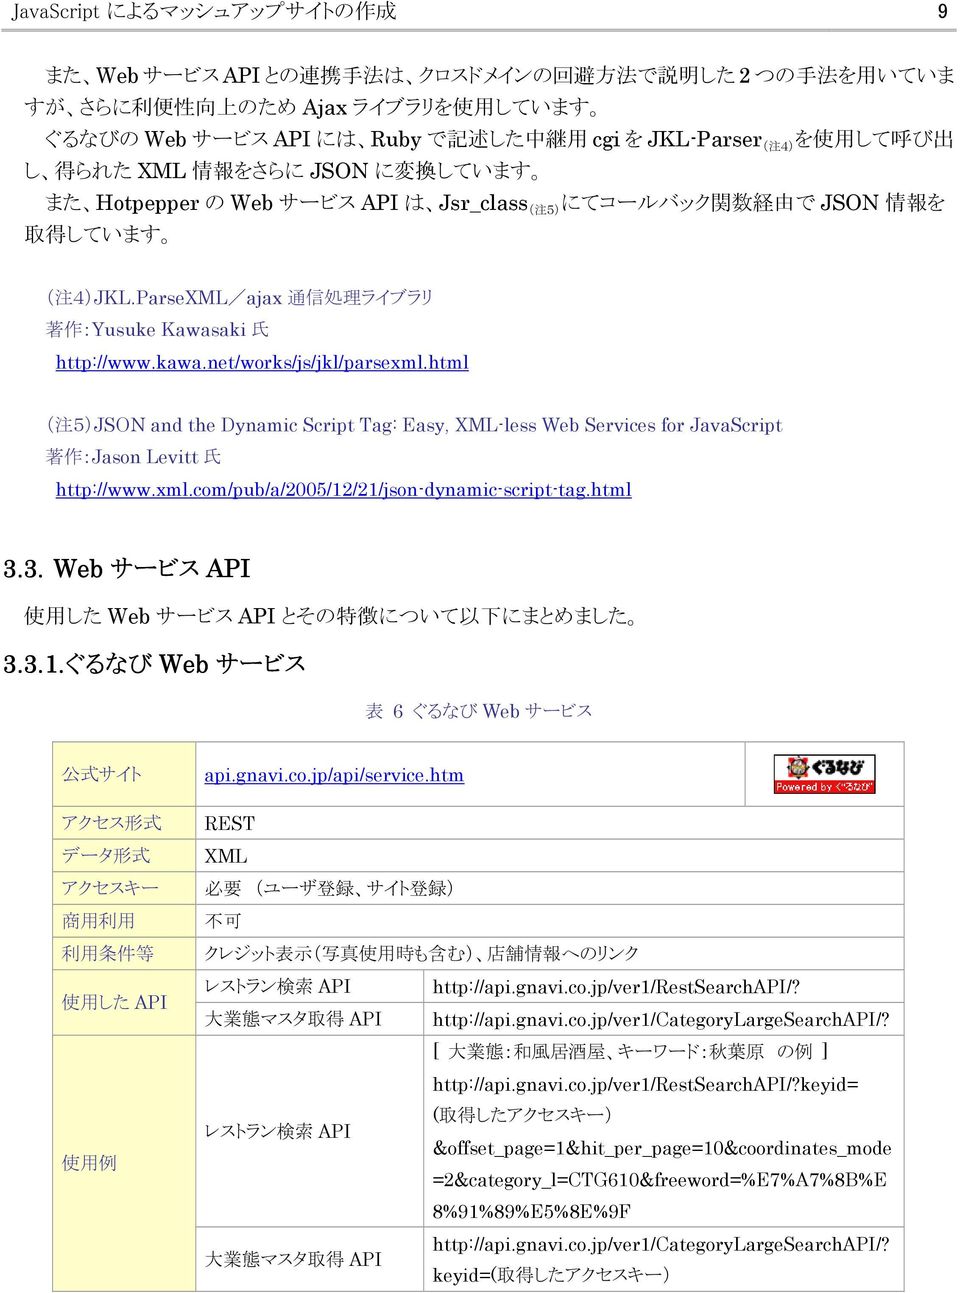 ParseXML/ajax 通 信 処 理 ライブラリ 著 作 :Yusuke Kawasaki 氏 http://www.kawa.net/works/js/jkl/parsexml.